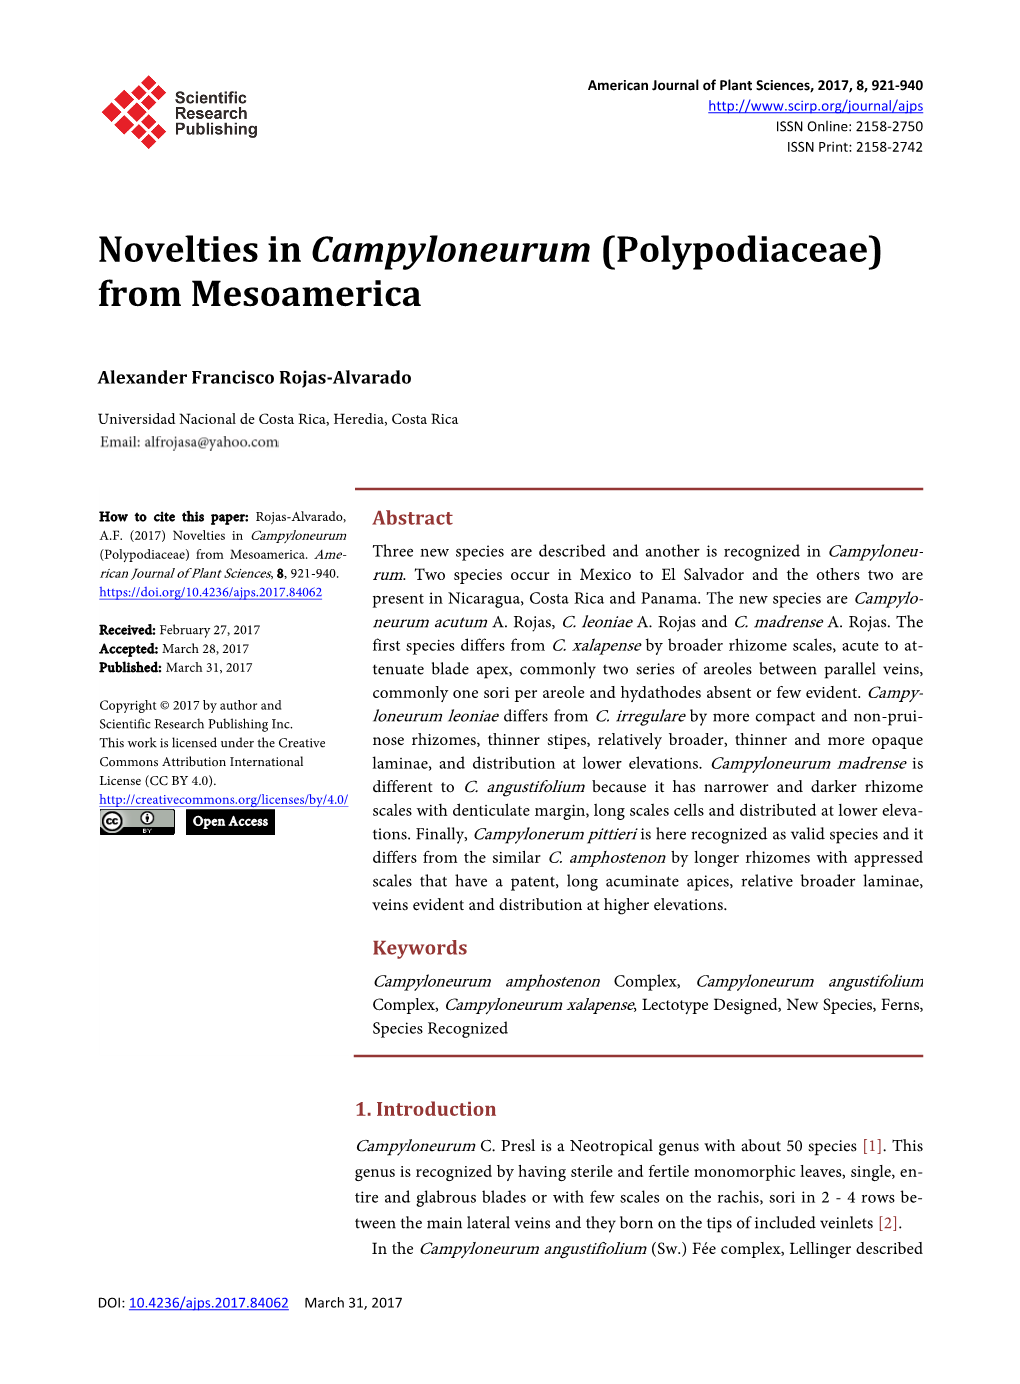 Novelties in Campyloneurum (Polypodiaceae) from Mesoamerica